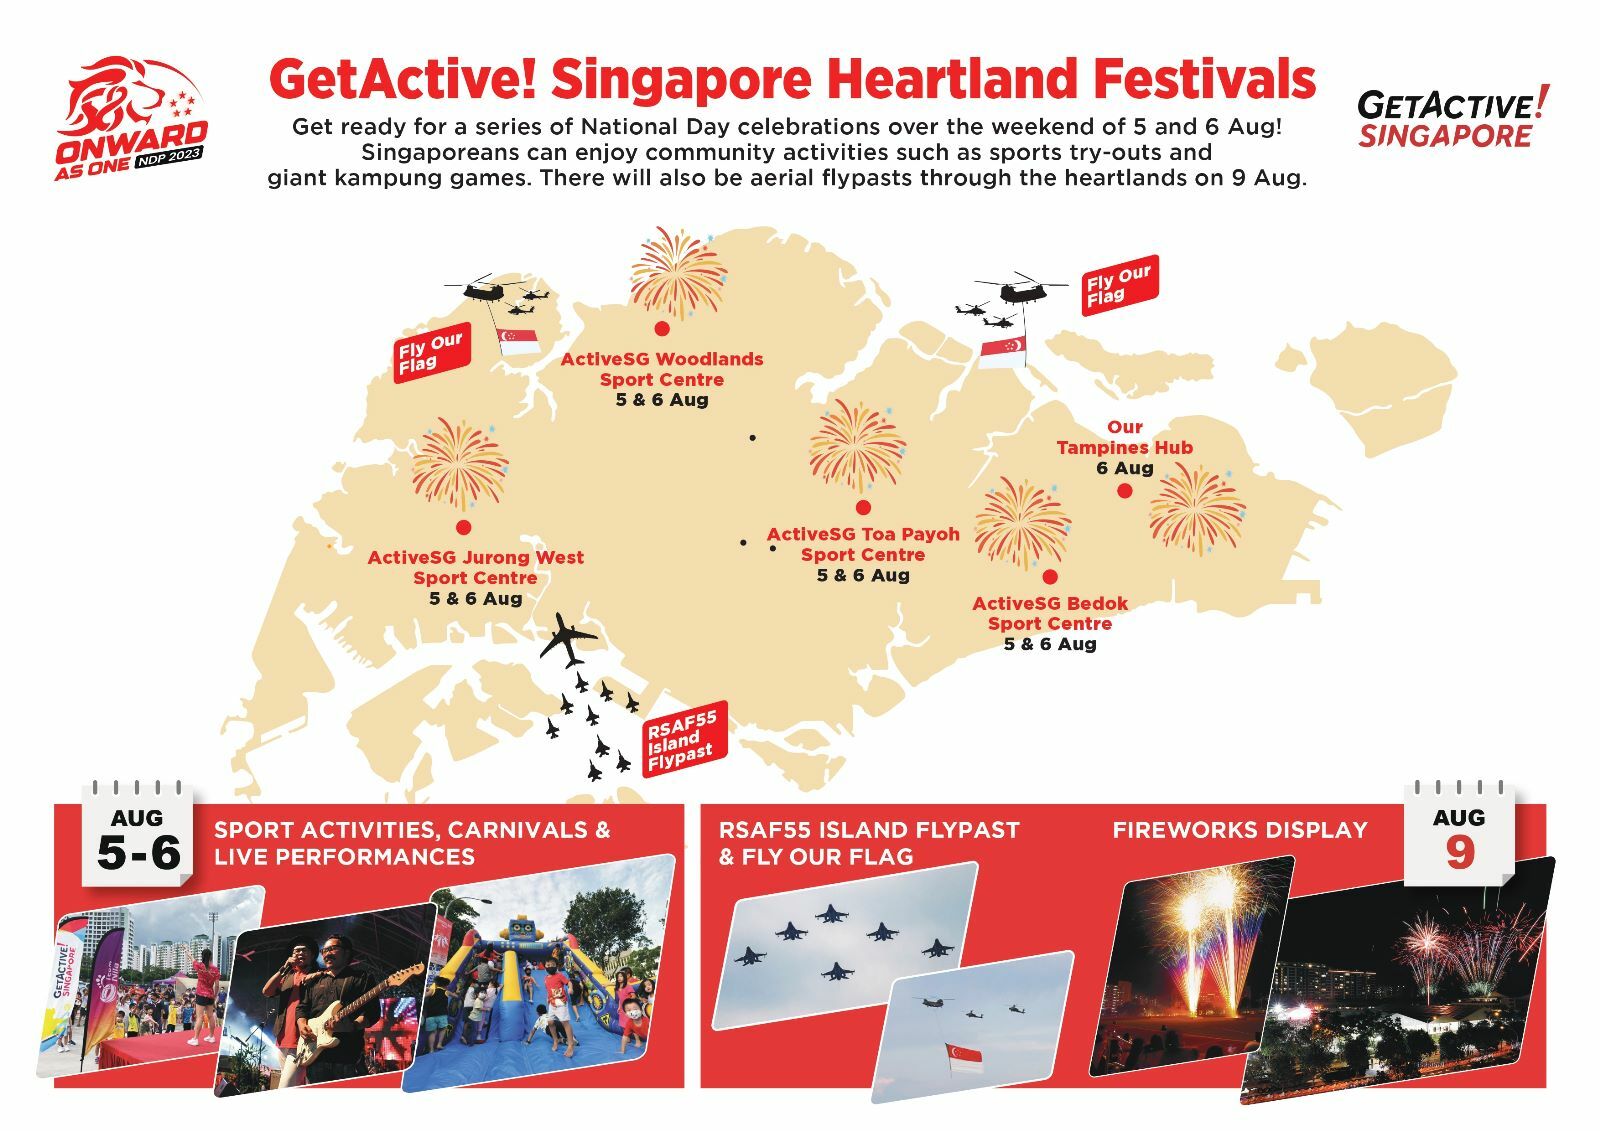 GetActive Singapore Heartland Festivals